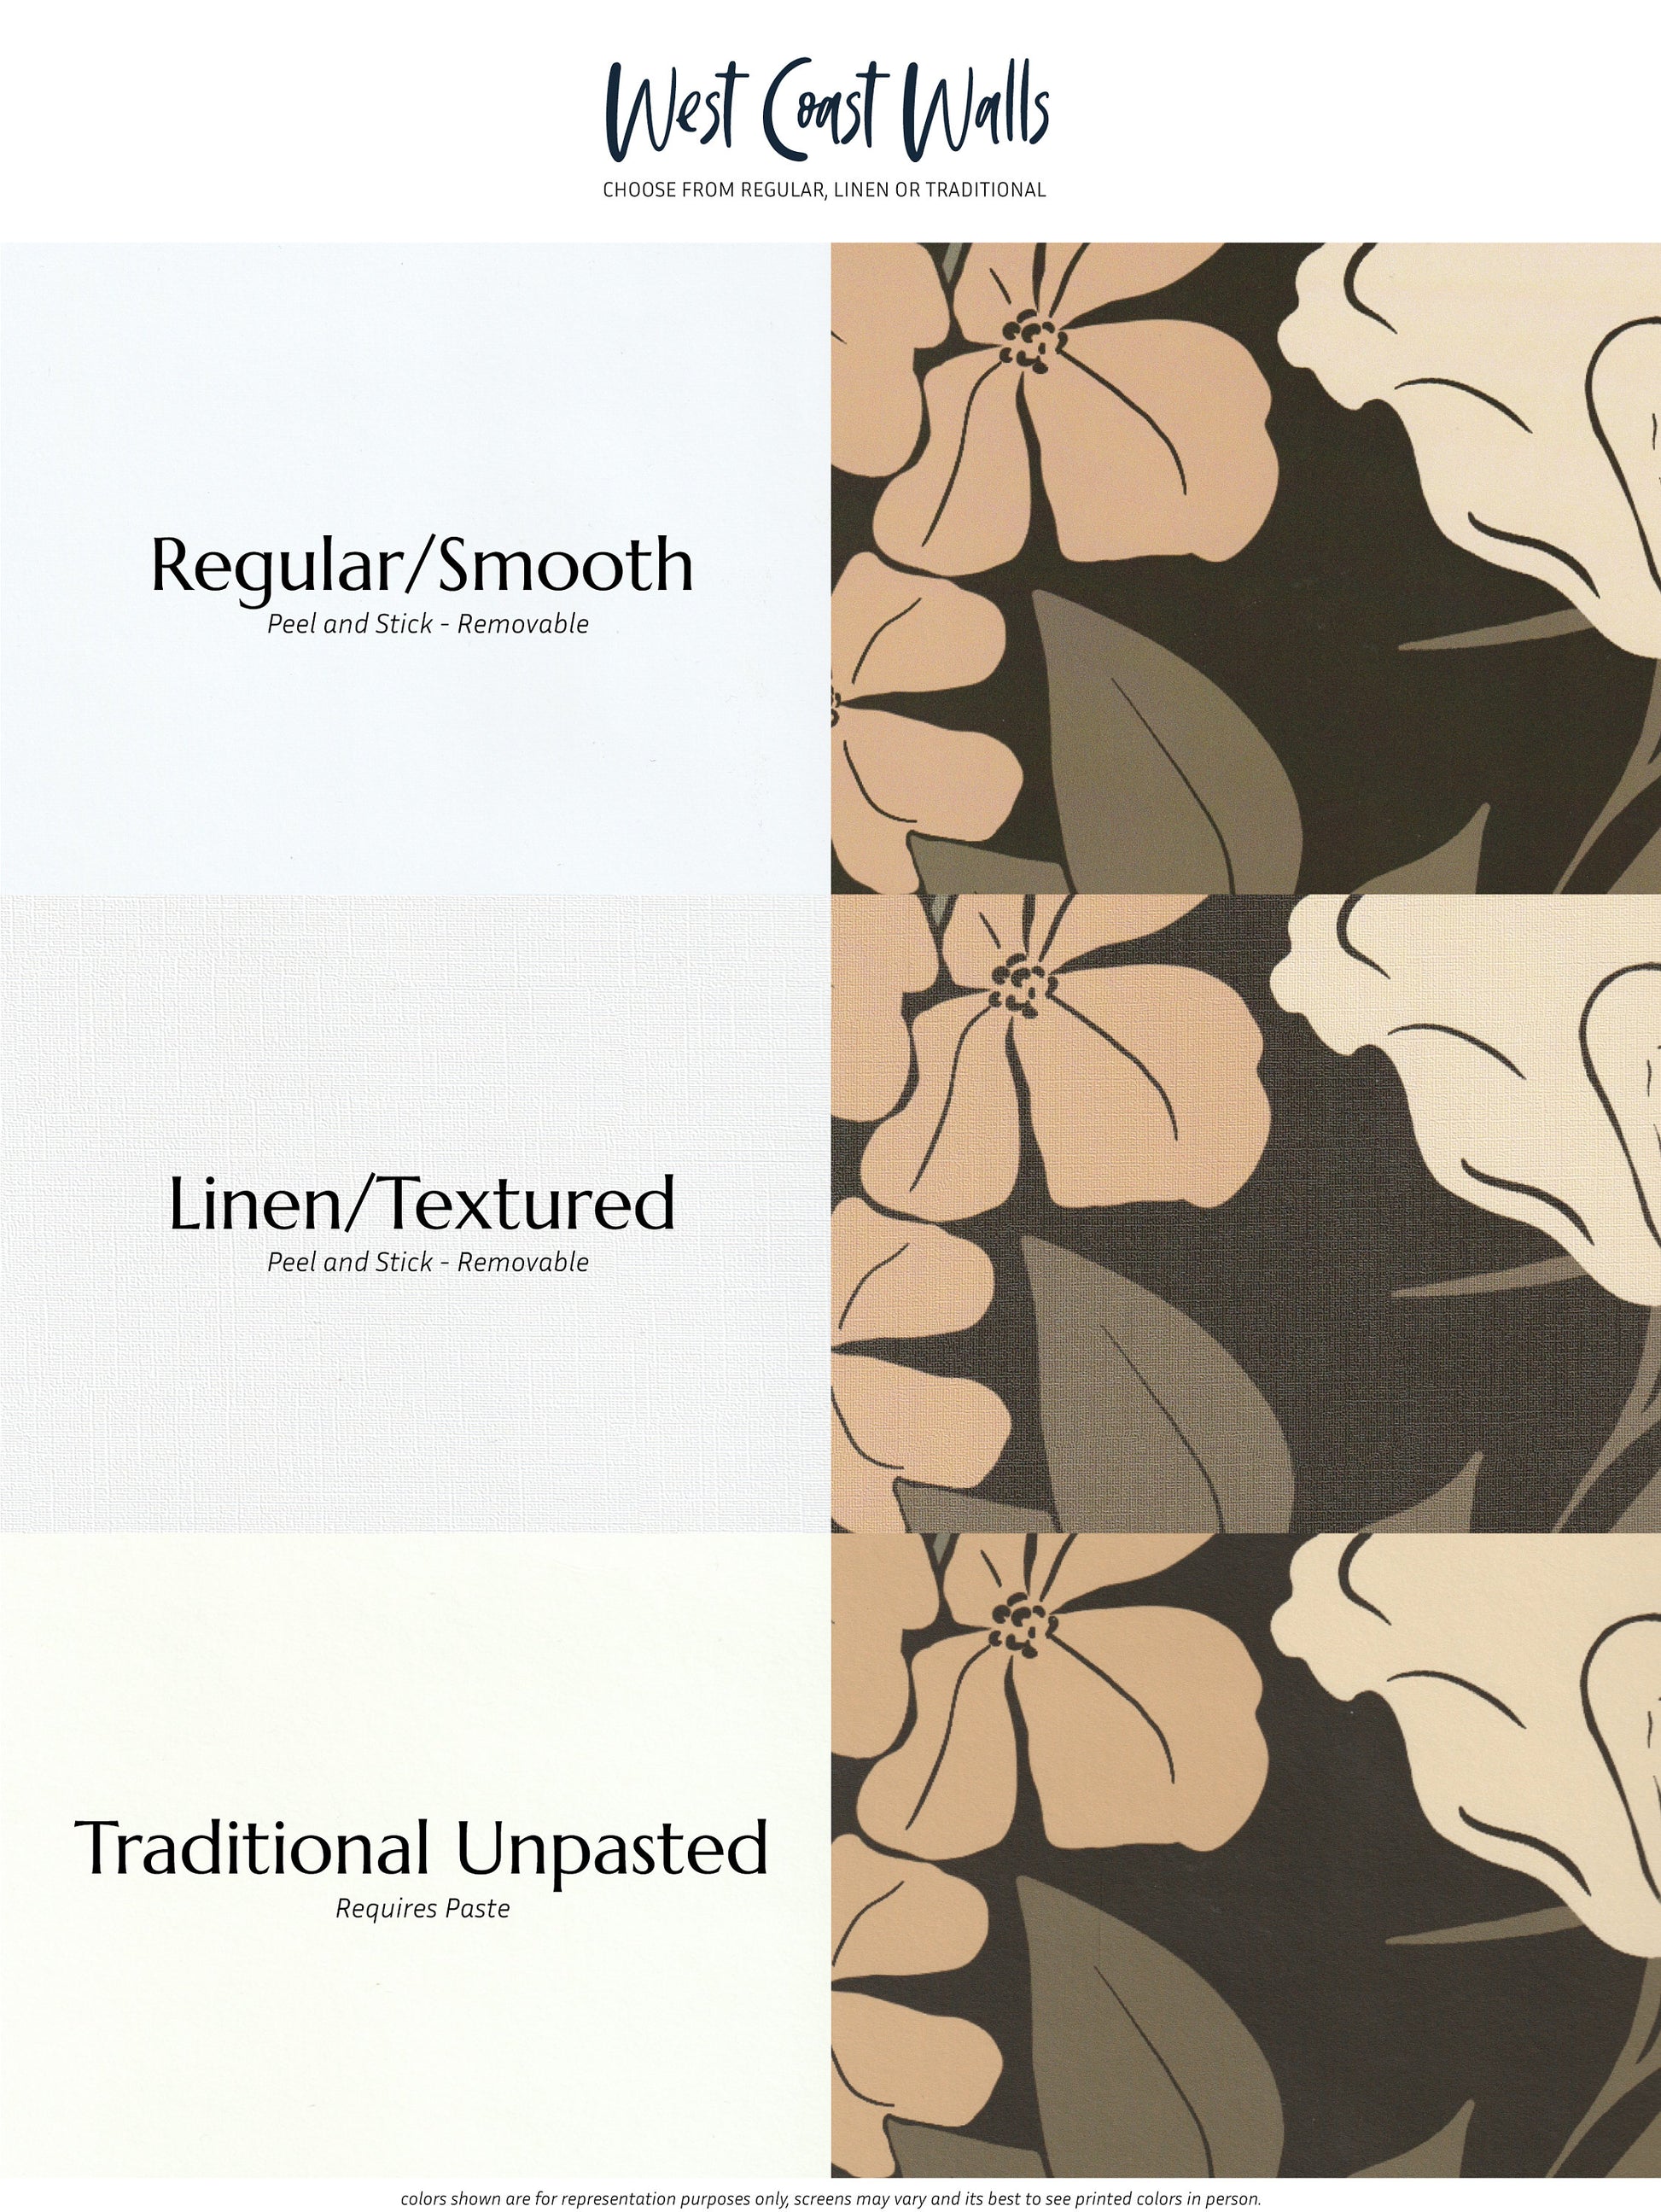 Golden Floral Wallpaper / Floral Wallpaper / Botanical Wallpaper / Non-metallic Gold Wallpaper / Luxurious Wallpaper